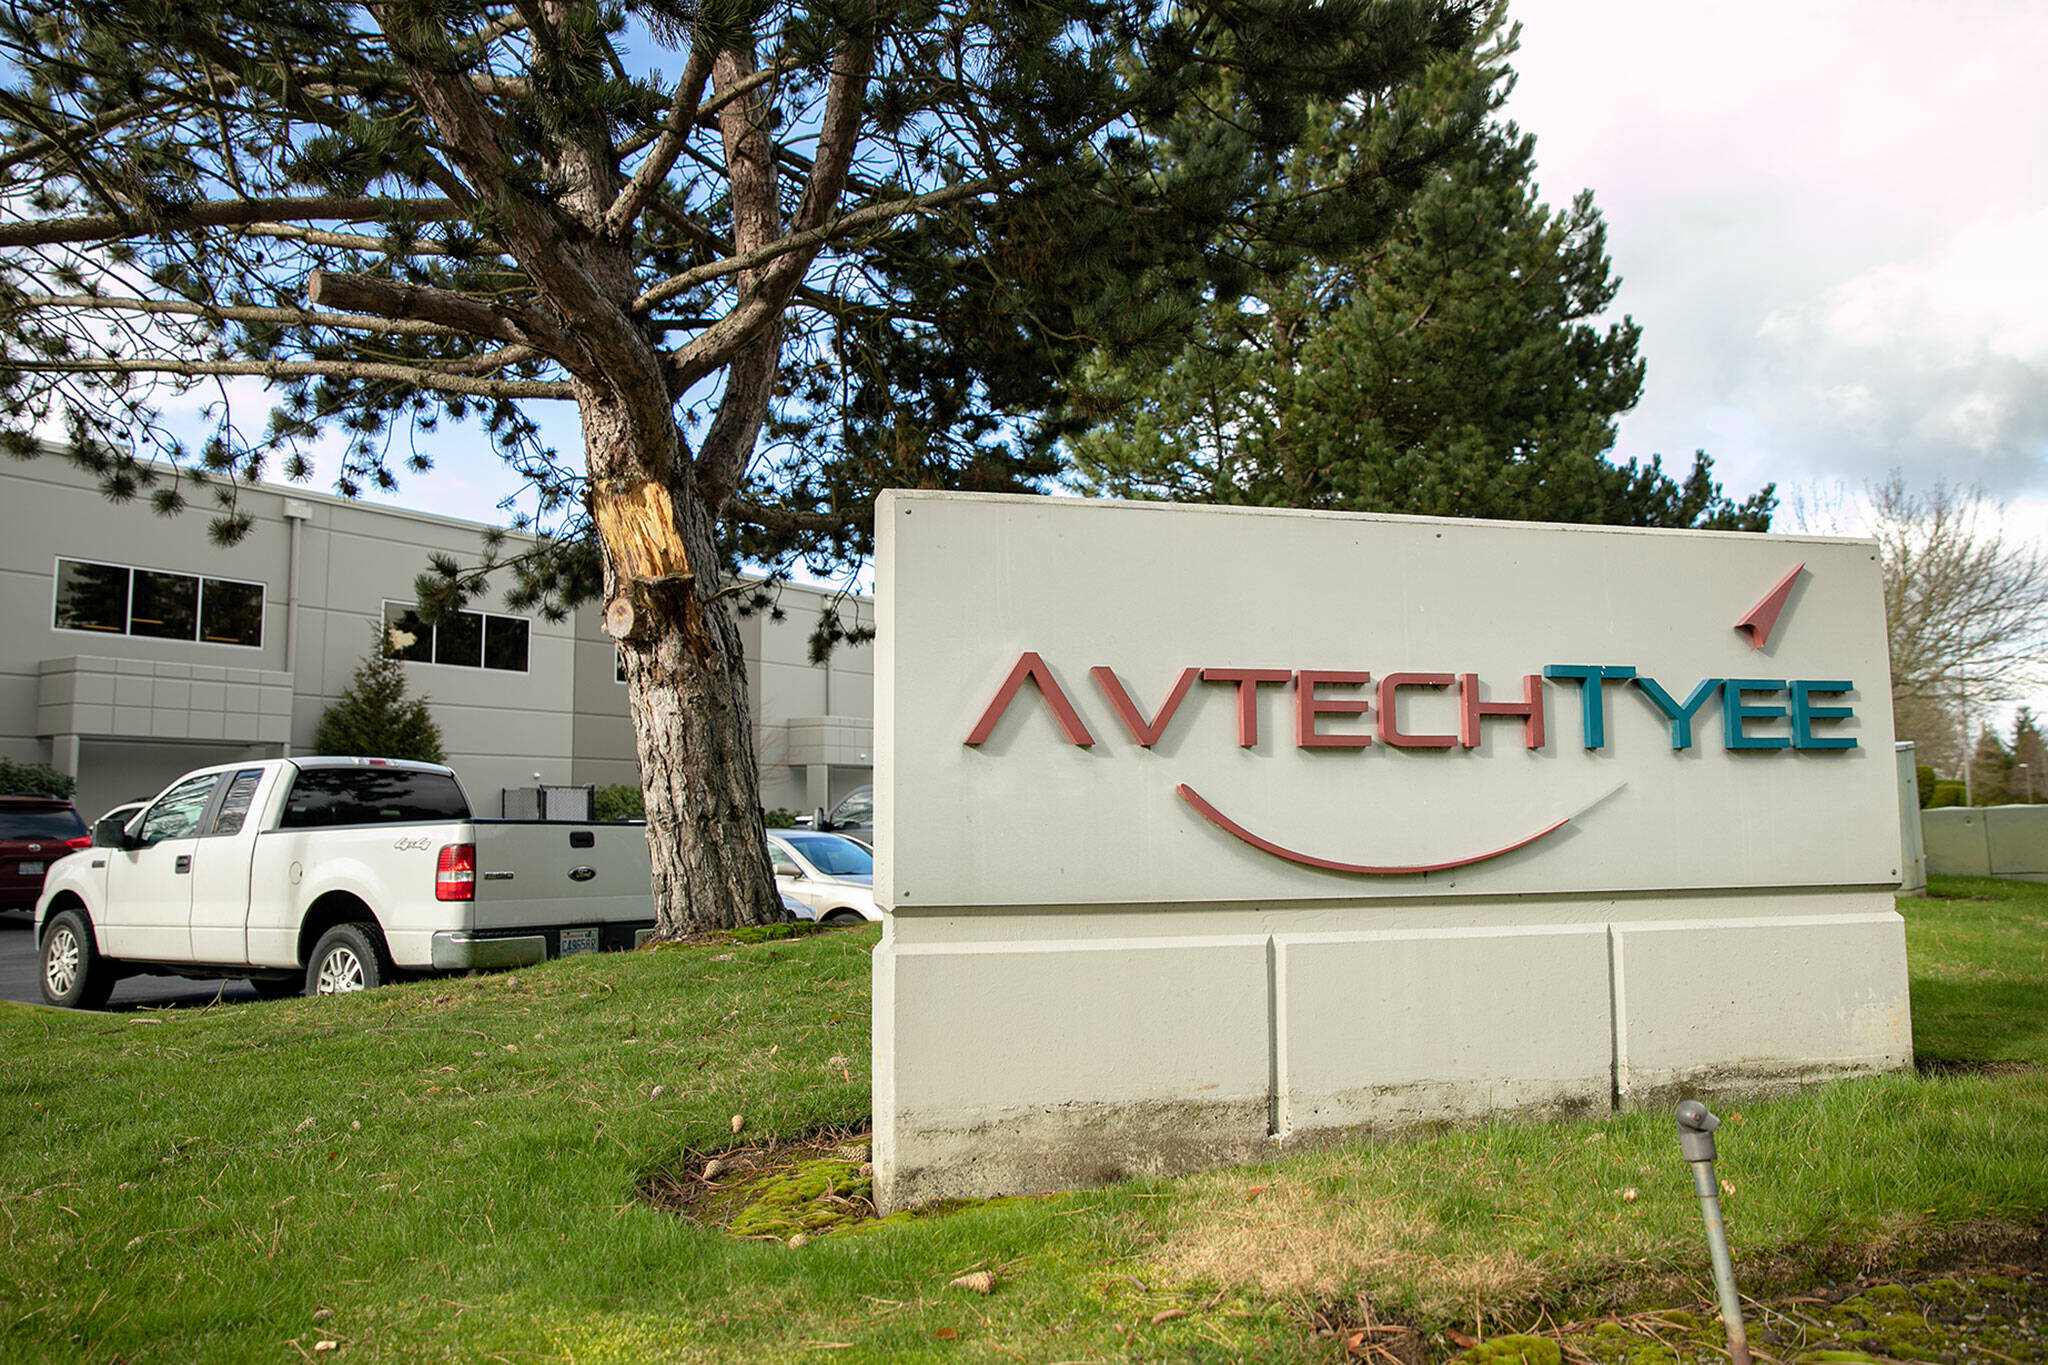 AvtechTyee headquarters on Feb. 10, in Everett. (Ryan Berry / The Herald)